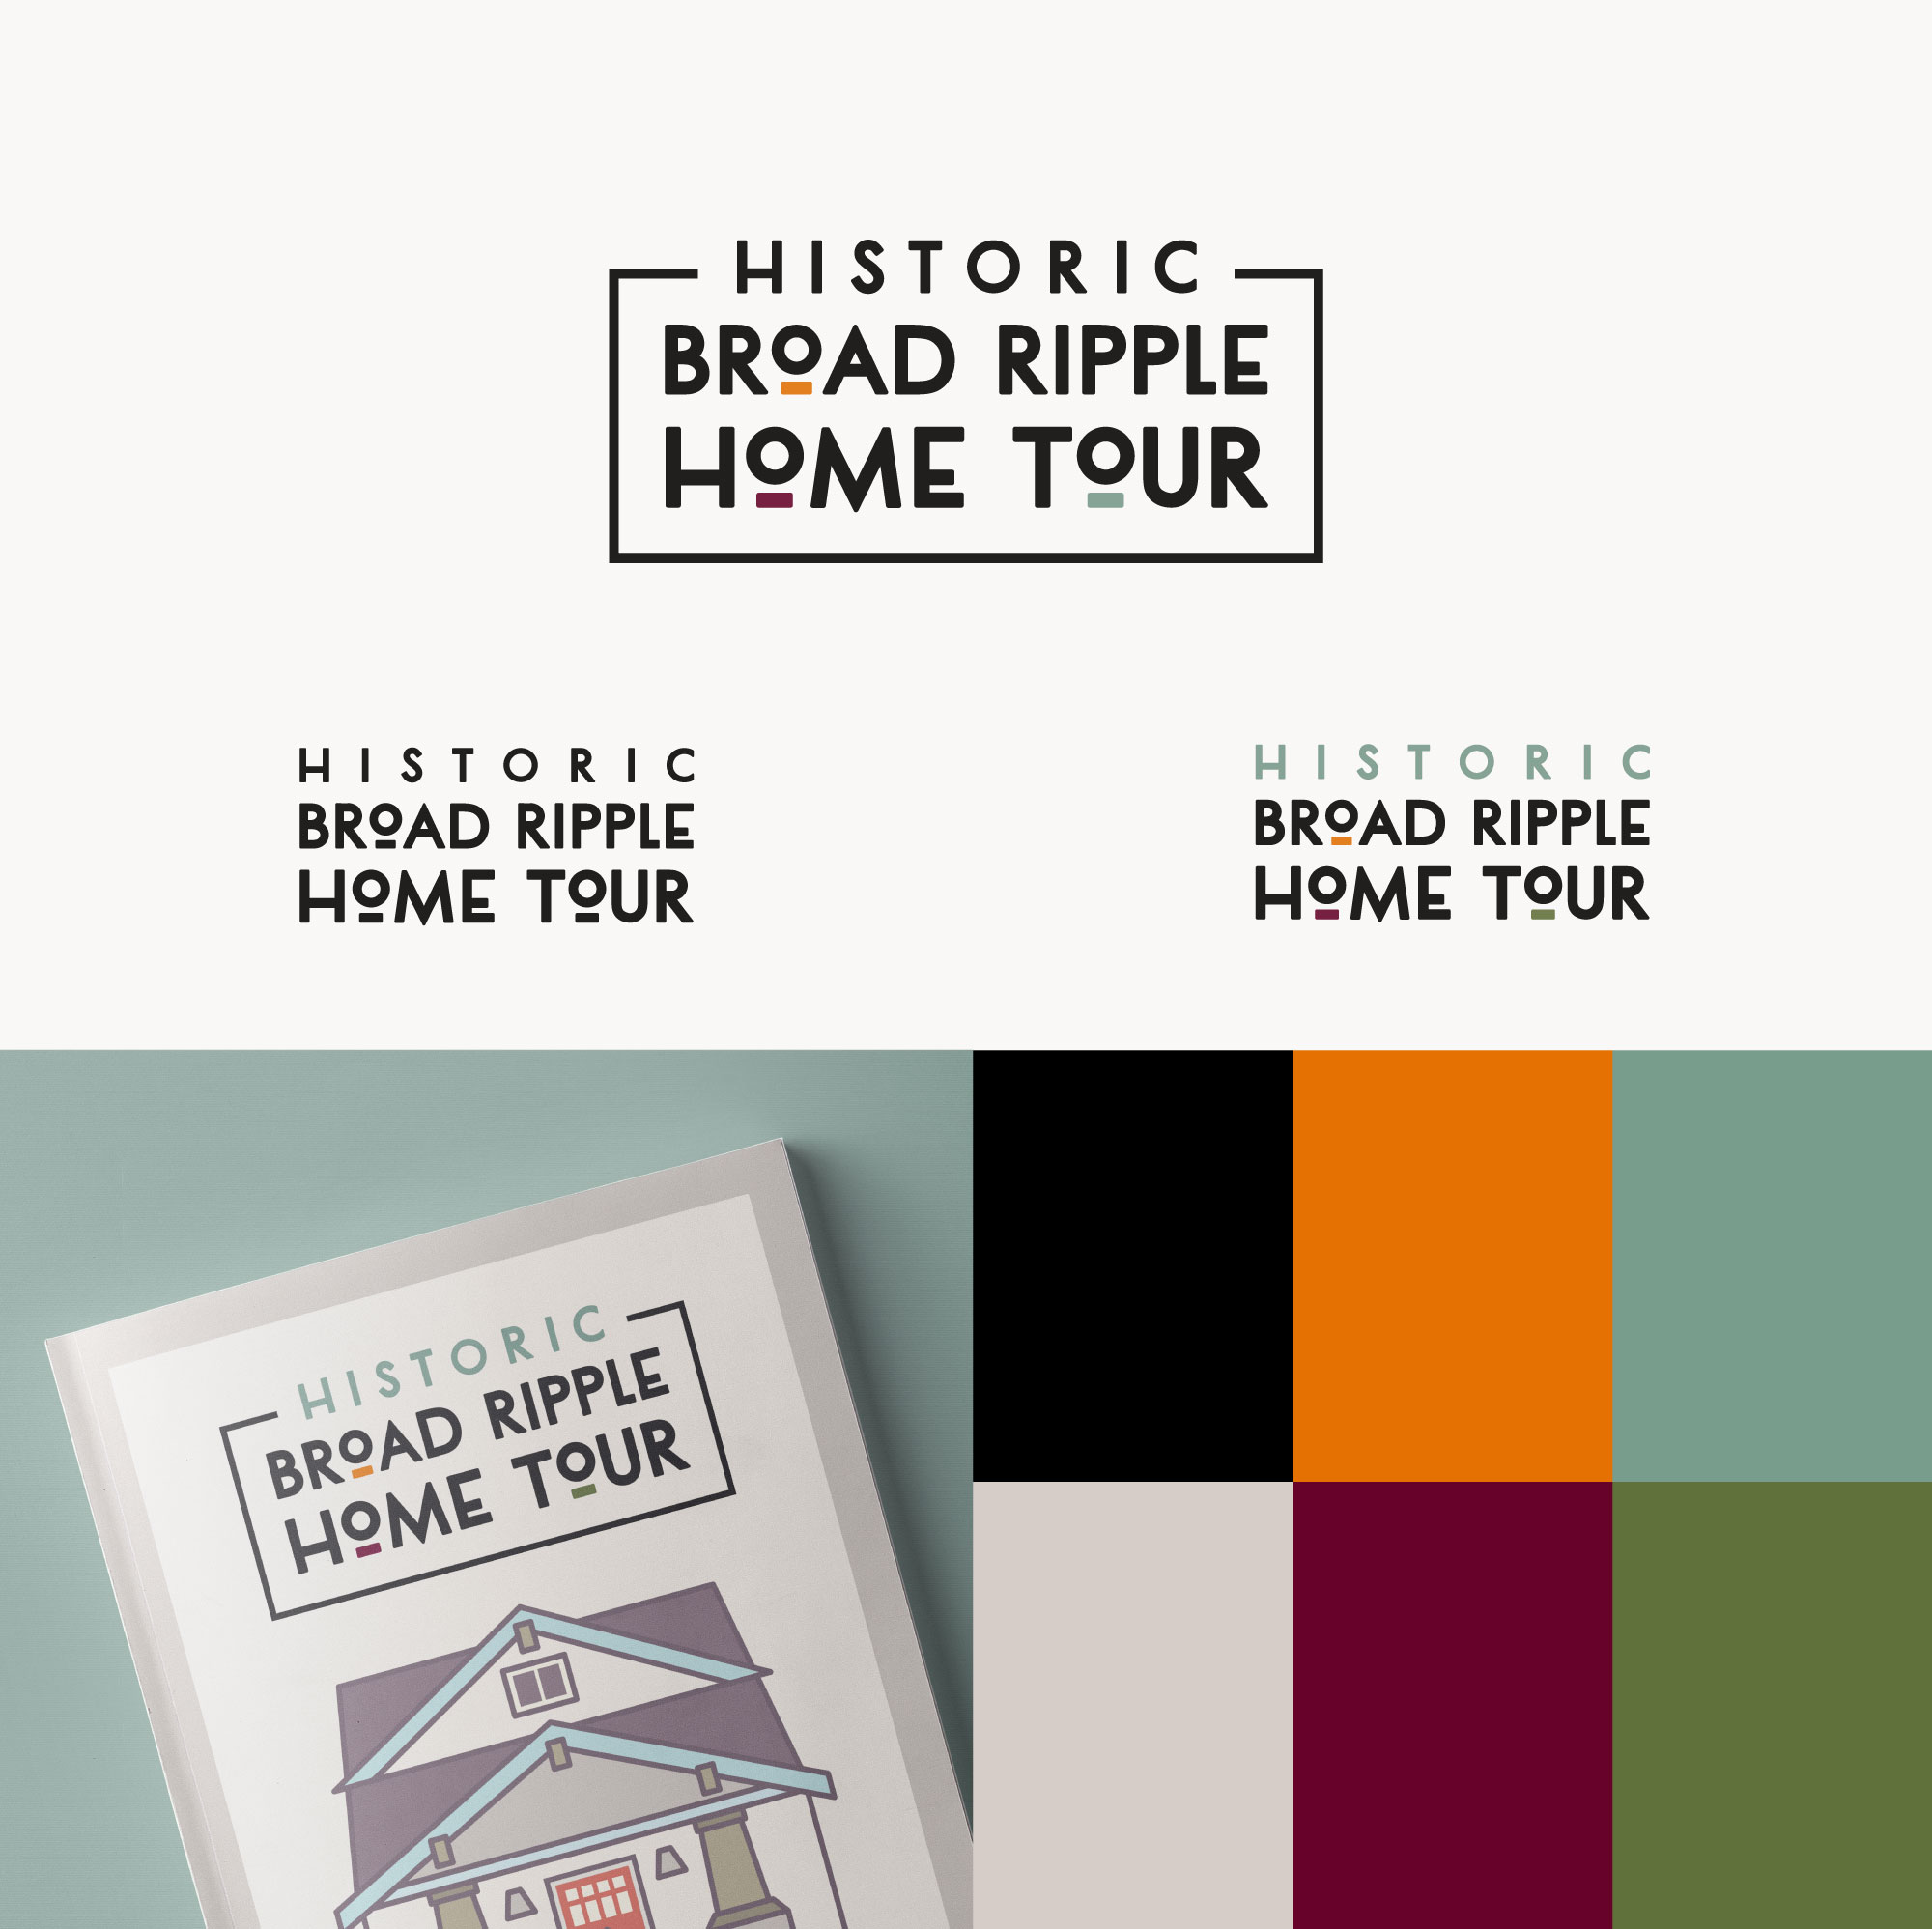 mast-design-co-work-broad-ripple-historic-home-tour-logo-branding-redesign-refresh.jpg